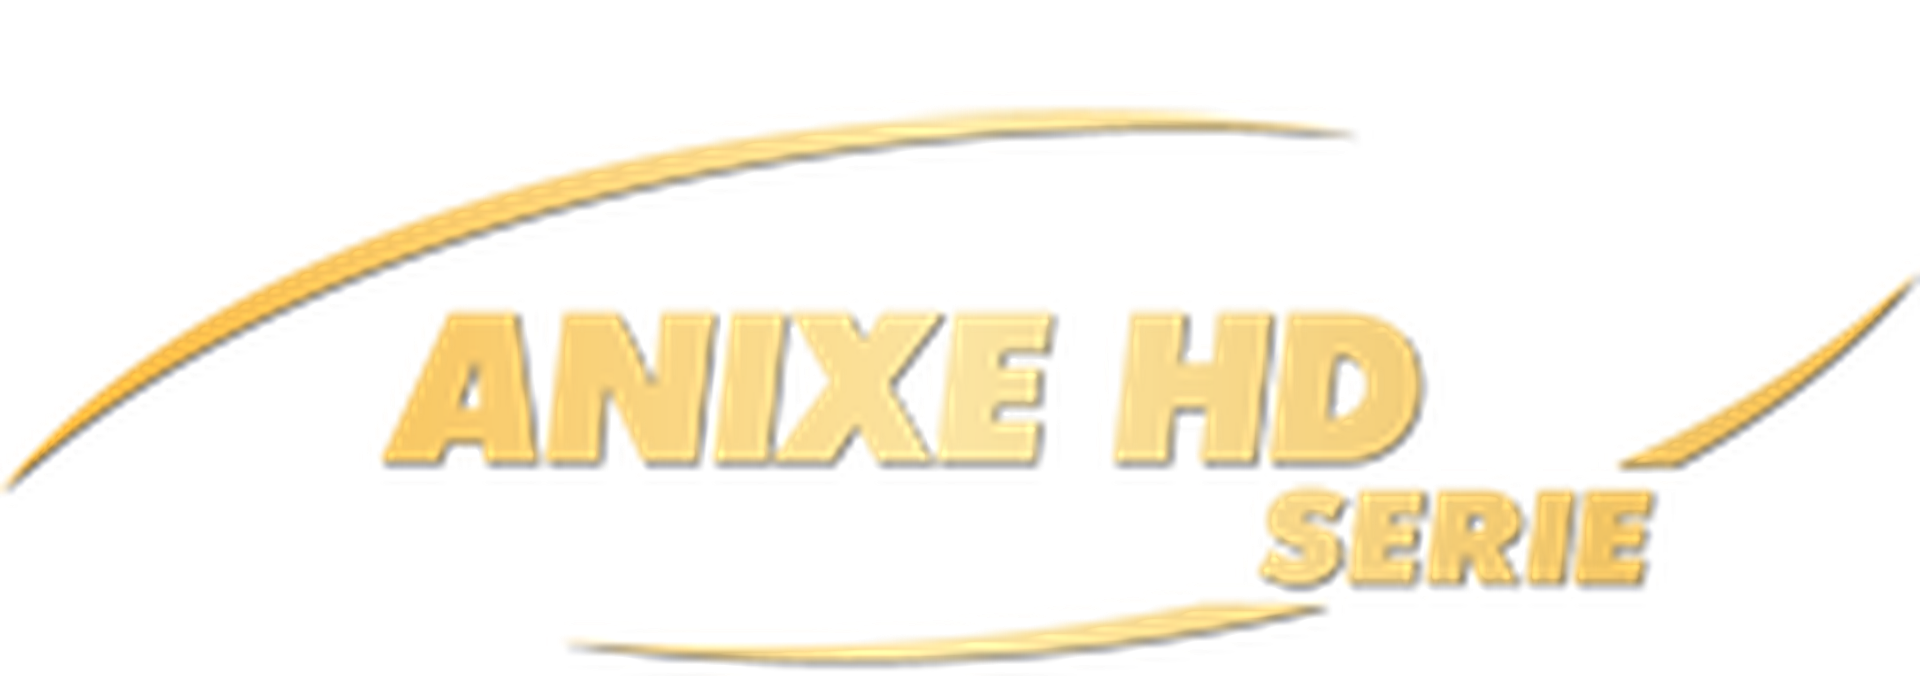 ANIXE_HD_SERIE_Logo_2016.png